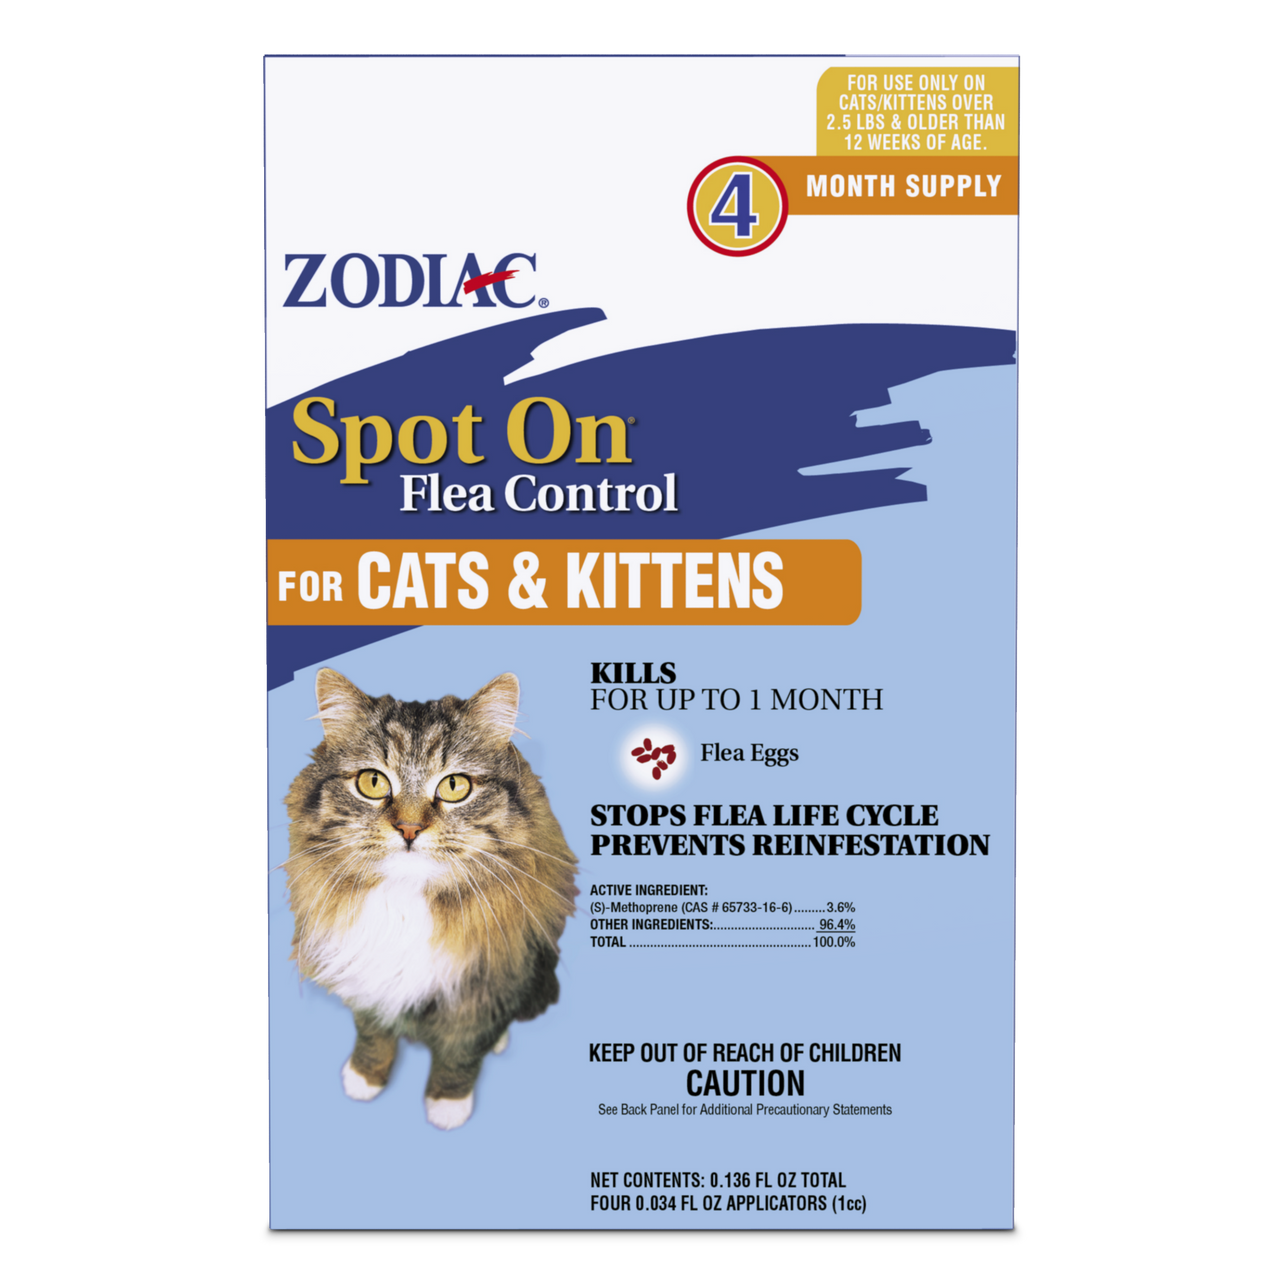 Zodiac Spot On Flea Control for Cats & Kittens 4 Pack